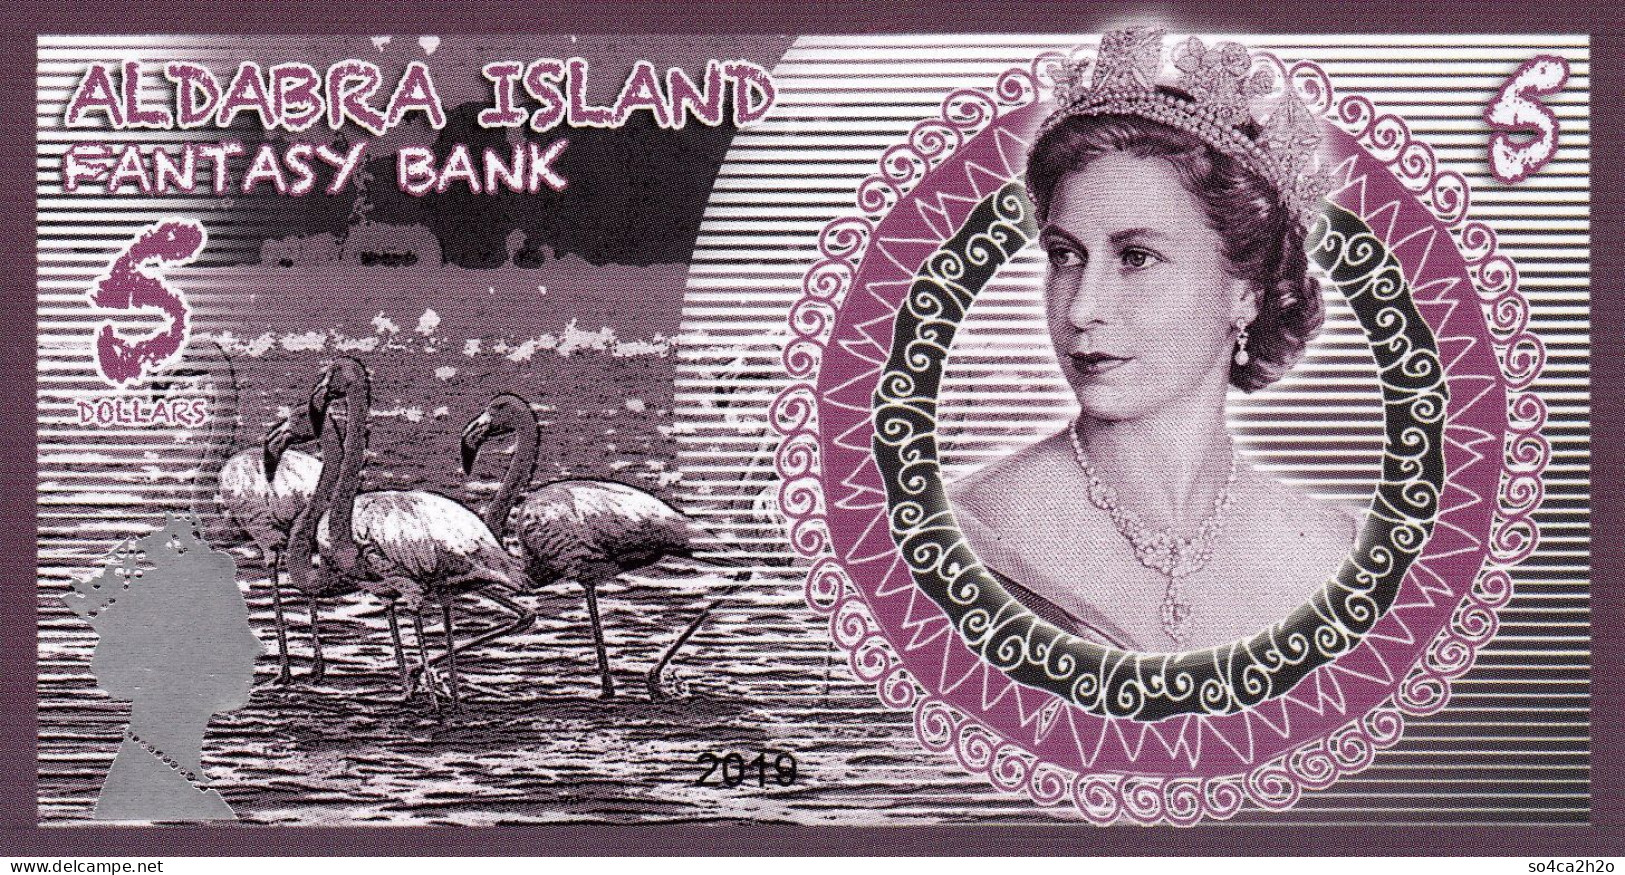 Aldabra Islands 5 Dollars 2019 UNC - Specimen